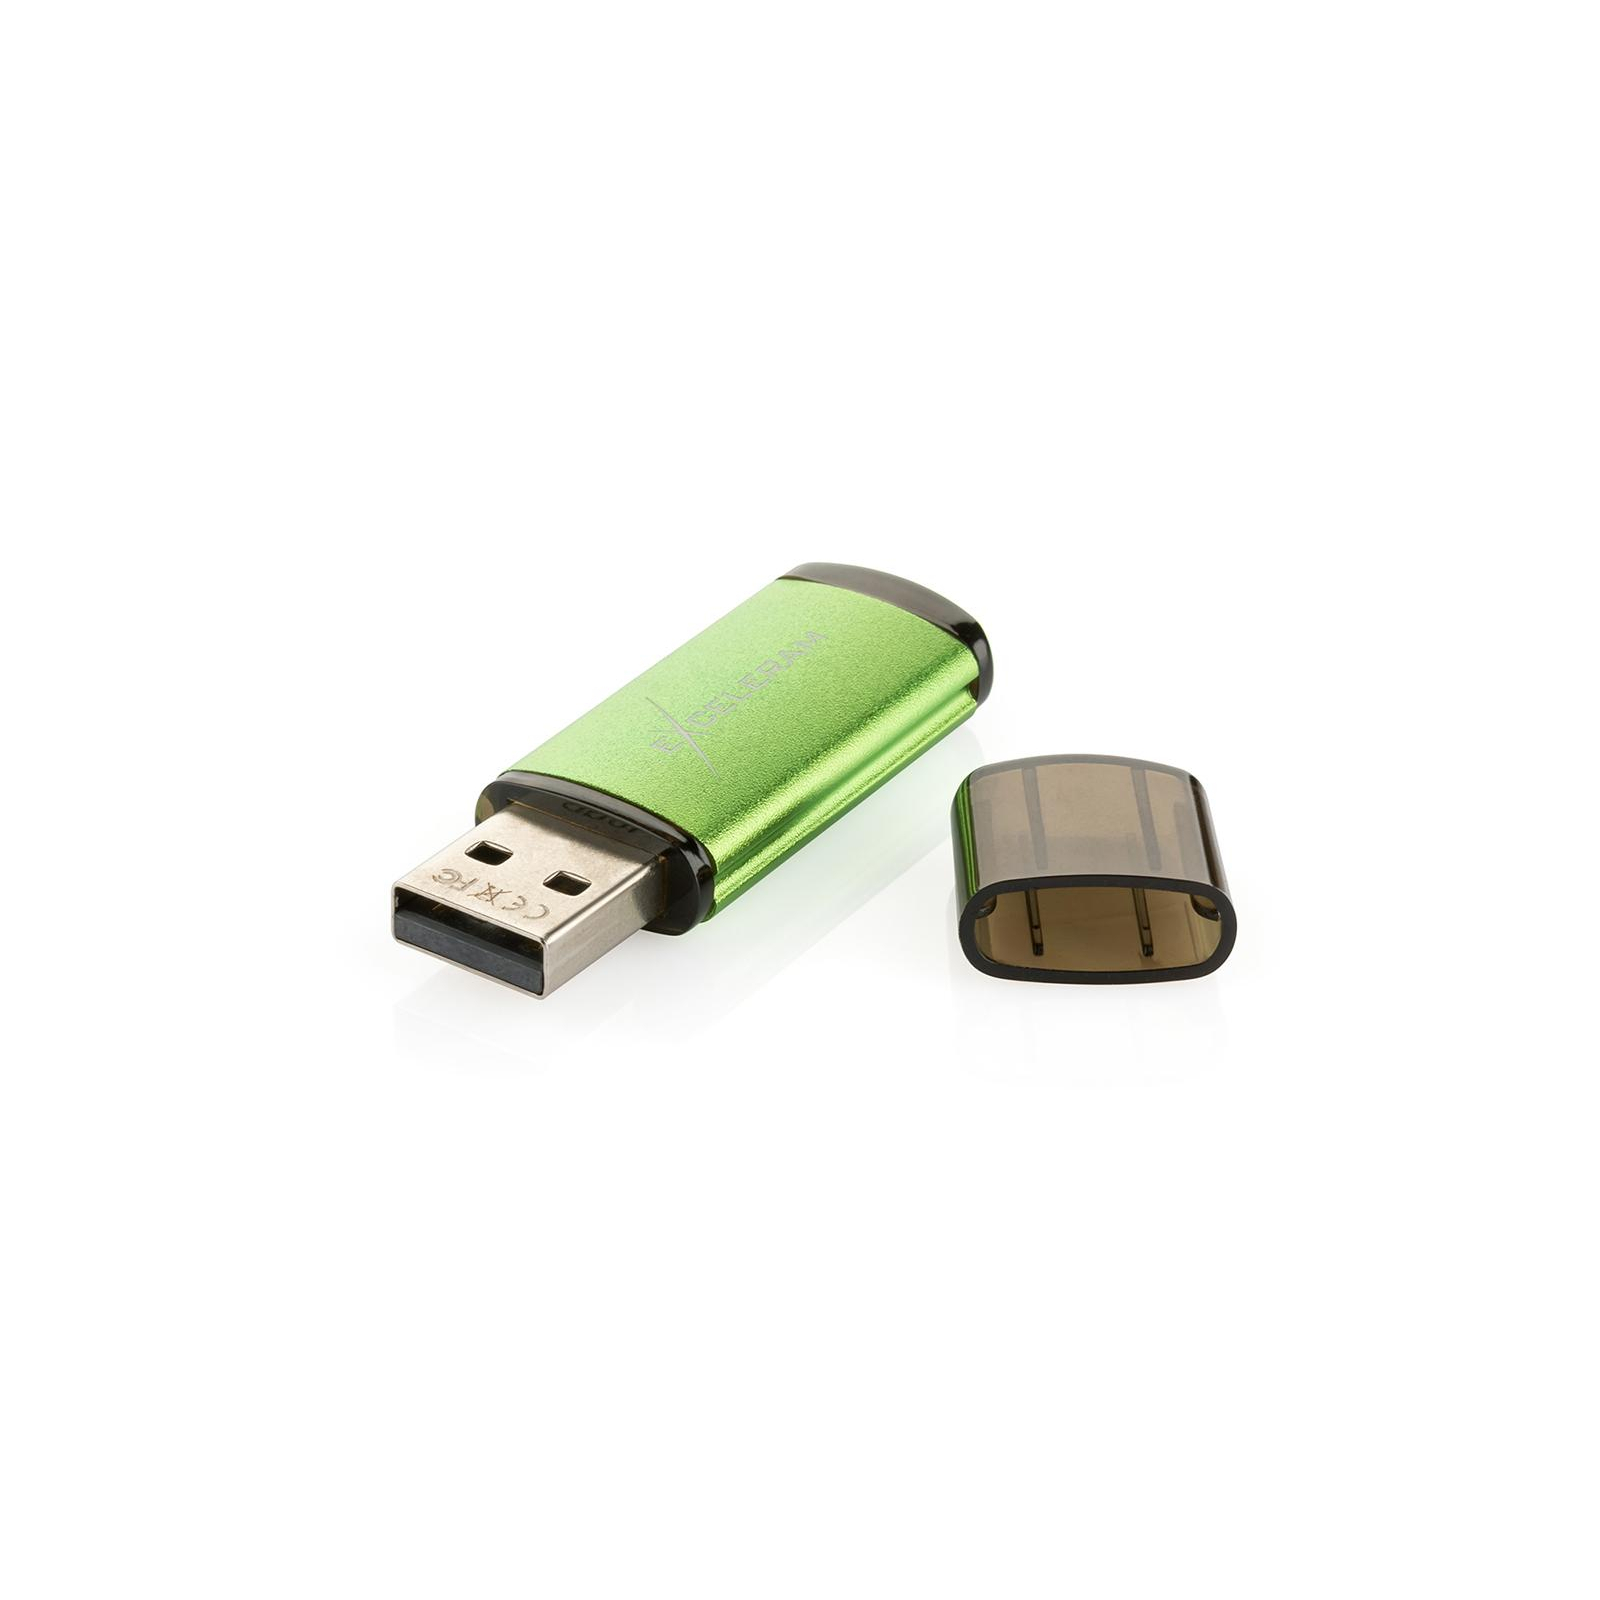 USB флеш накопитель eXceleram 32GB A3 Series Green USB 2.0 (EXA3U2GR32) изображение 5